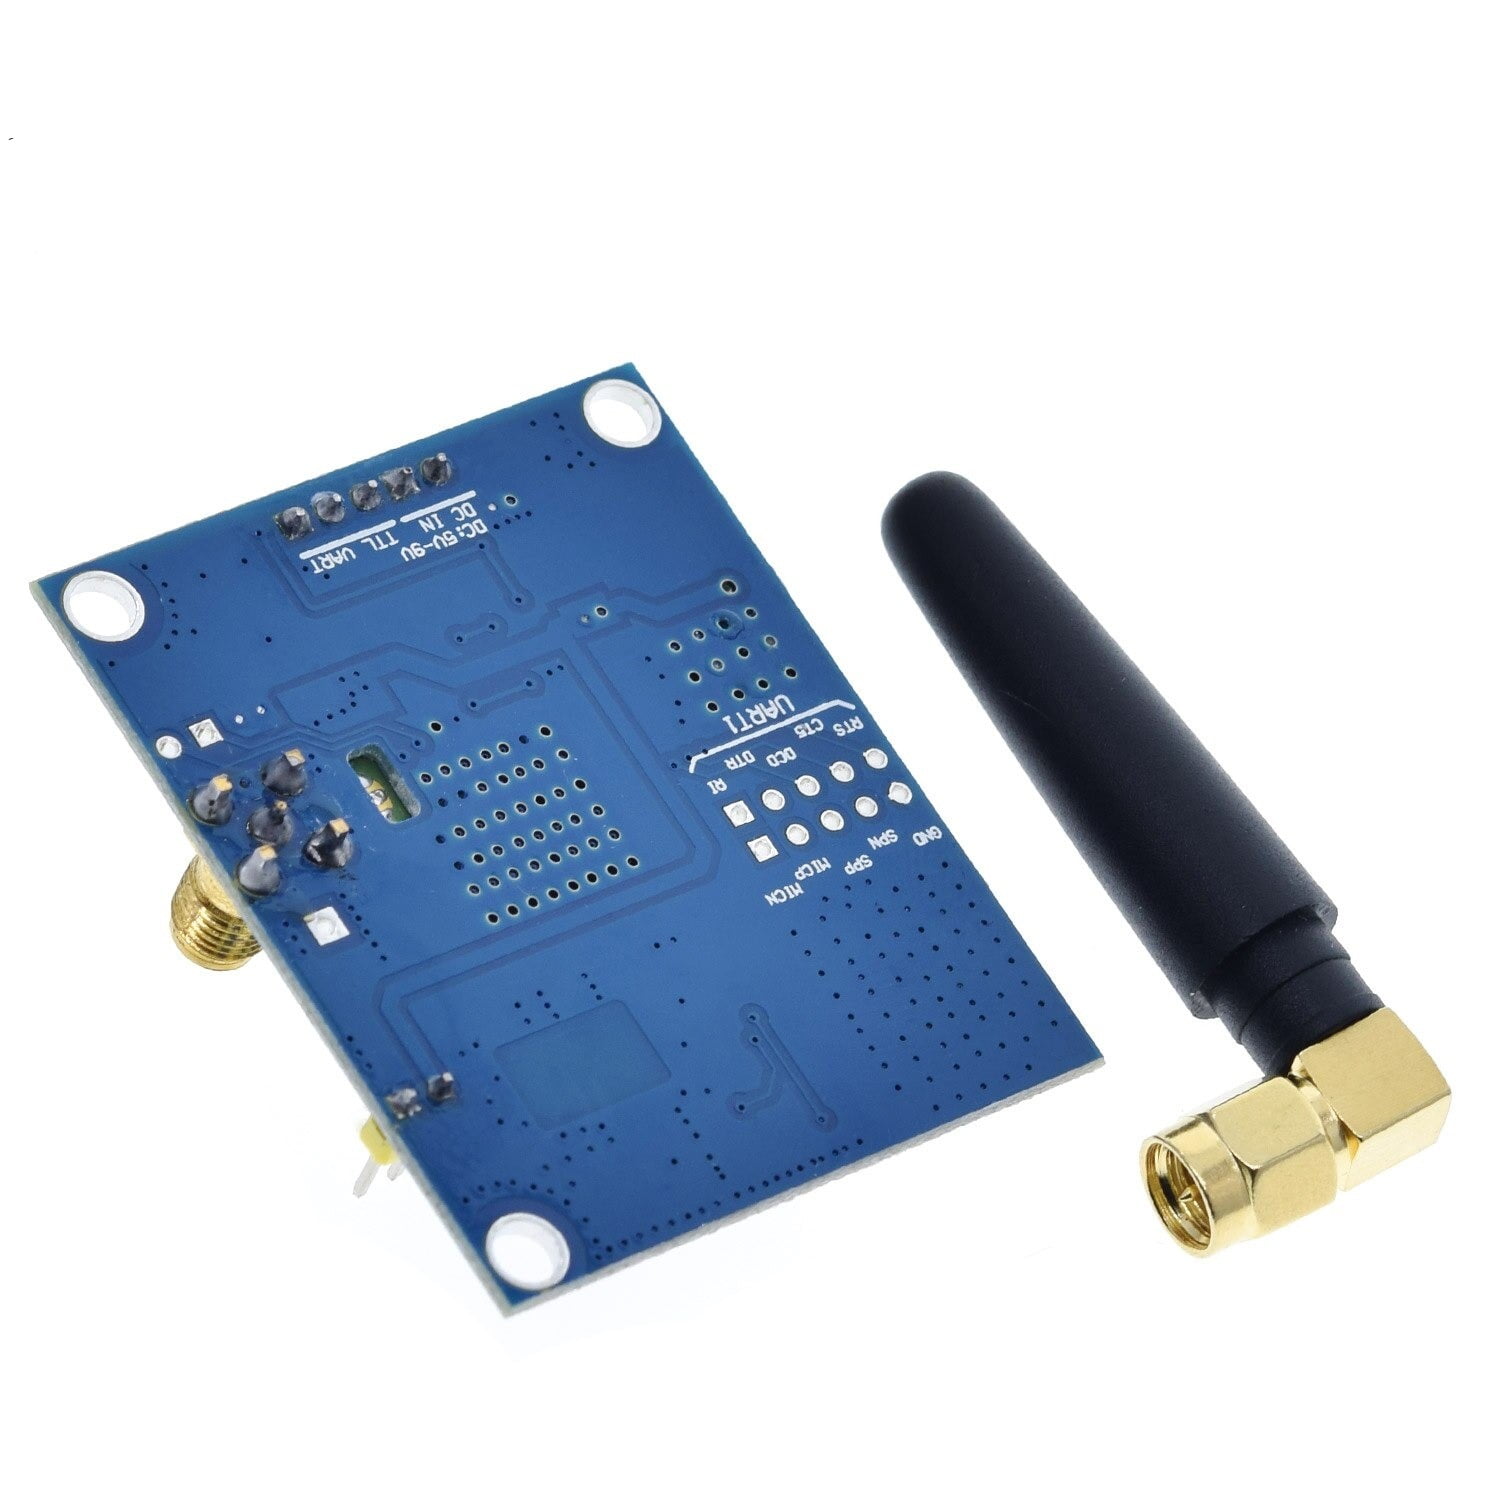 SIM800C module SMS data Bluetooth version (module with glue stick antenna )